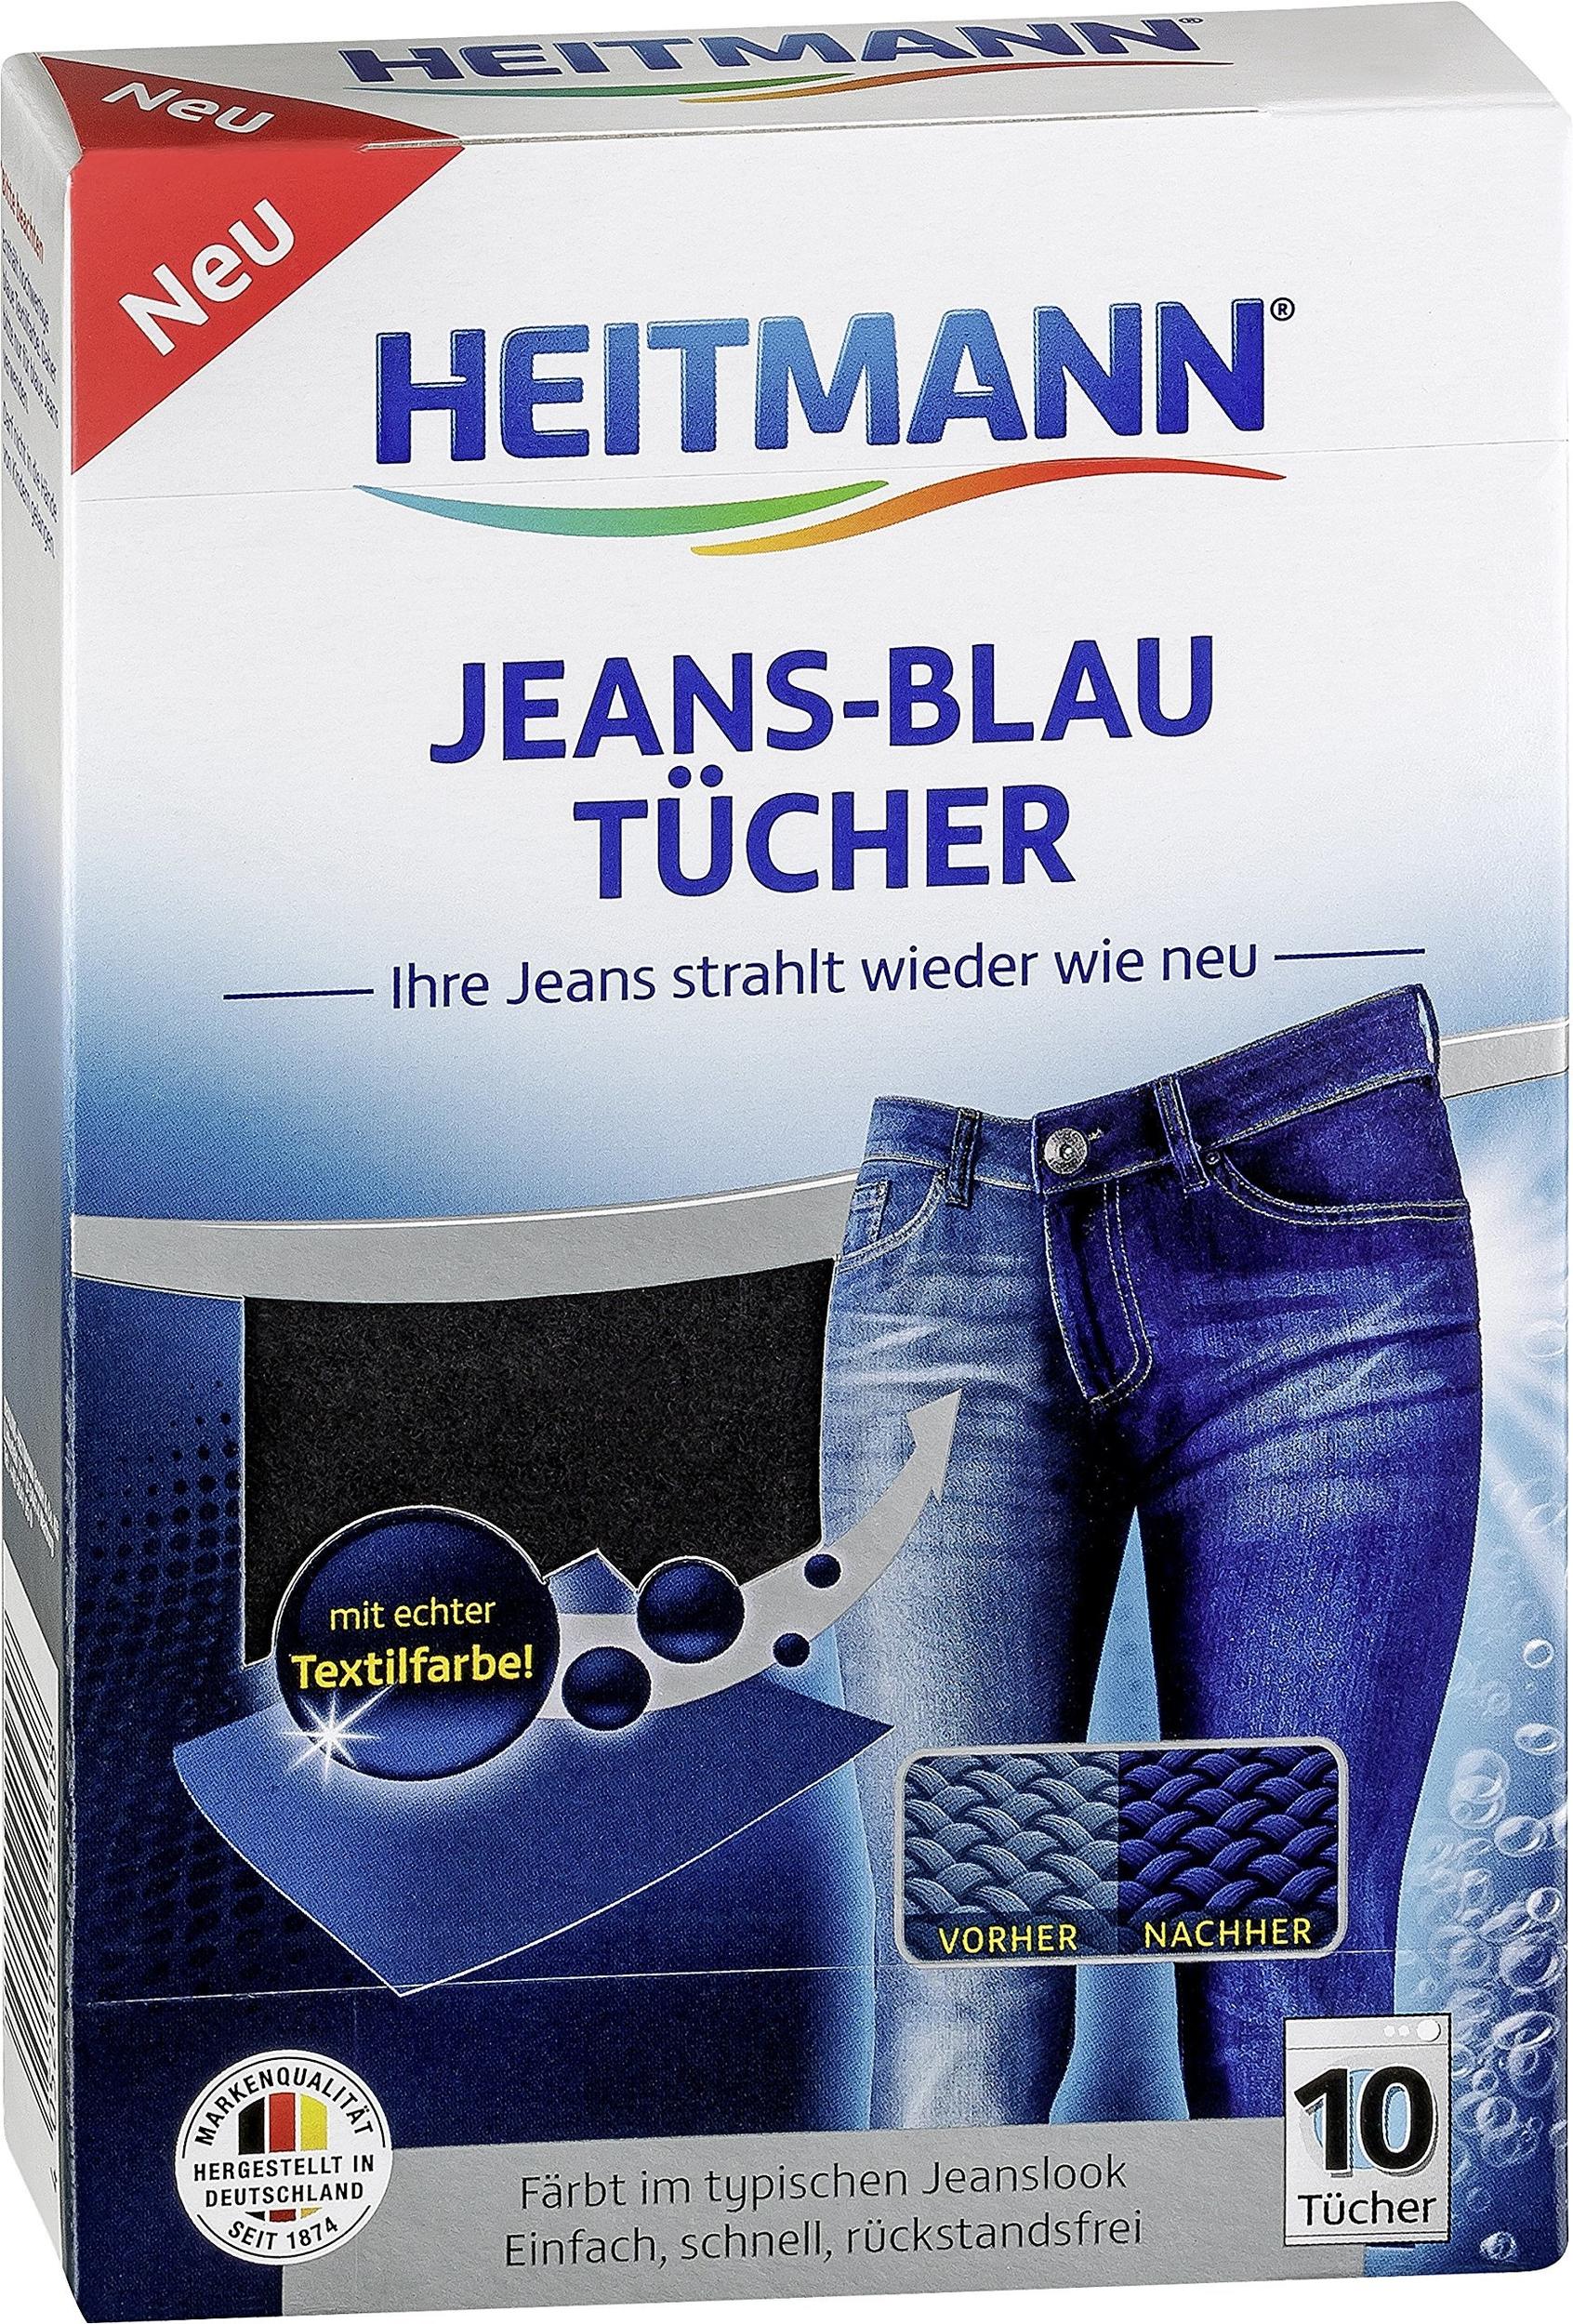 Heitmann Jeans Blau Tücher 10 Stück Test ❤️ Testbericht.de Februar 2022